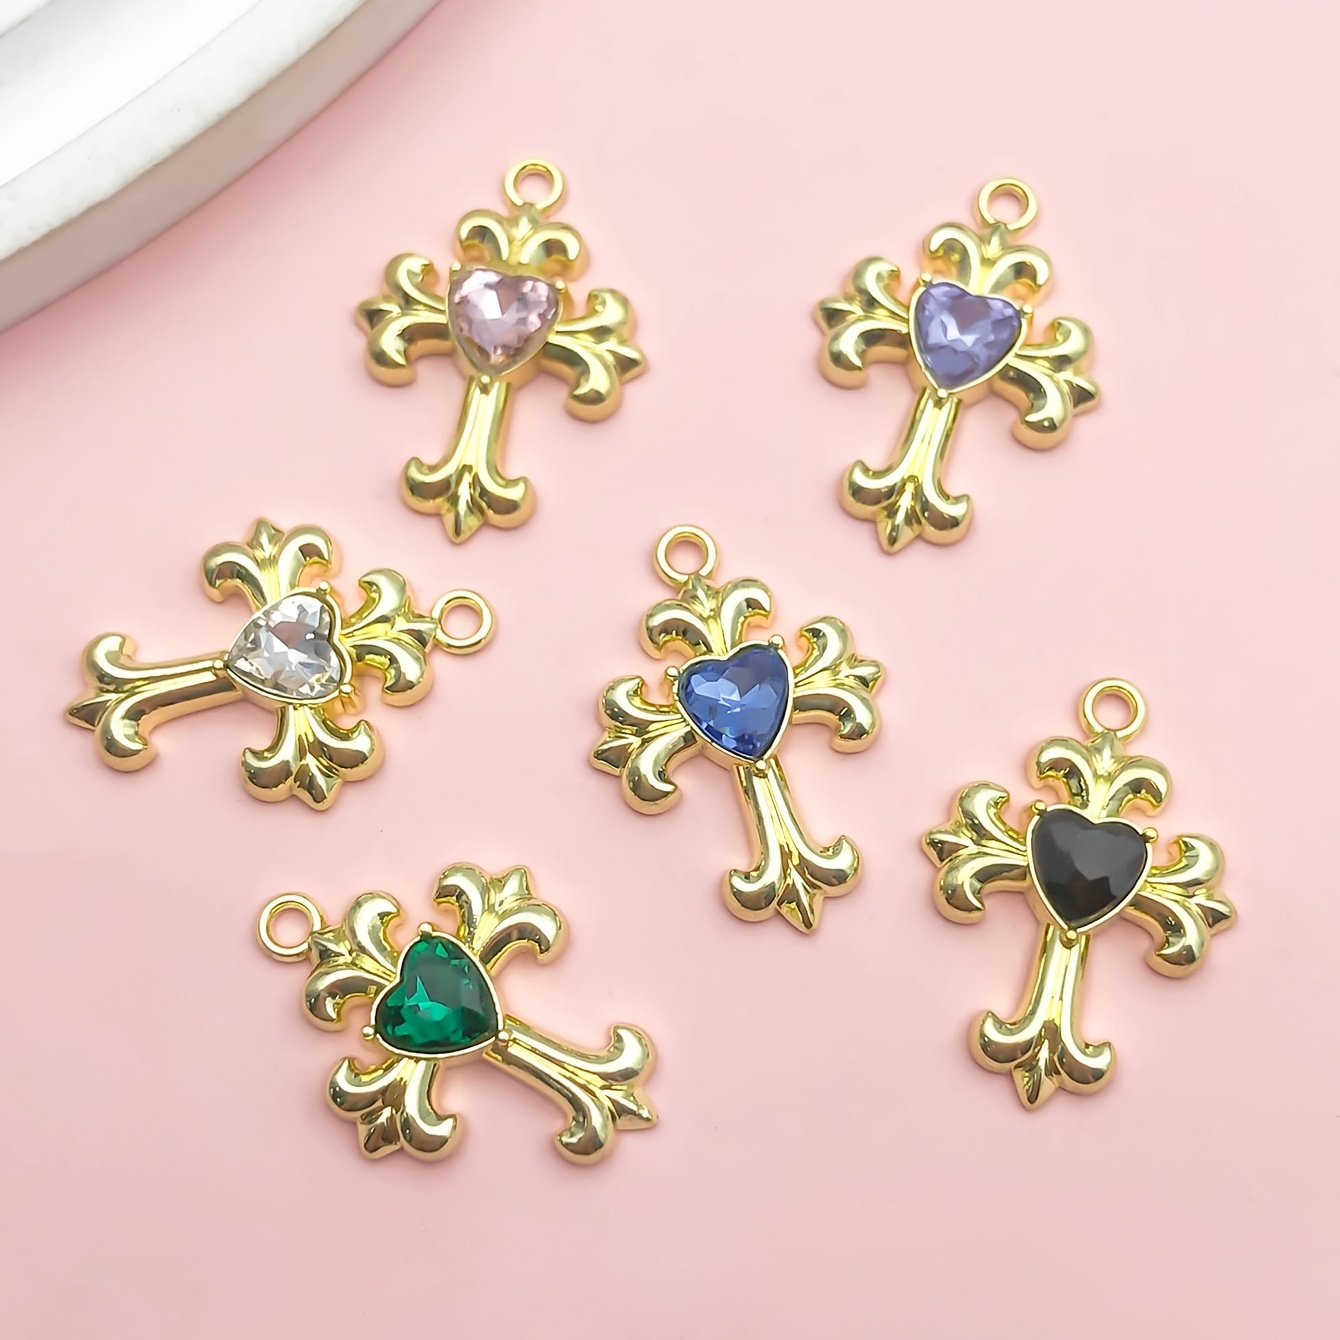 20Pcs/Lot Random Color Zinc Alloy Enamel Gold Plated Cute Heart Shape Charms Pendant for DIY Necklace Bracelets Earrings Jewelry, Jewels Making DIY